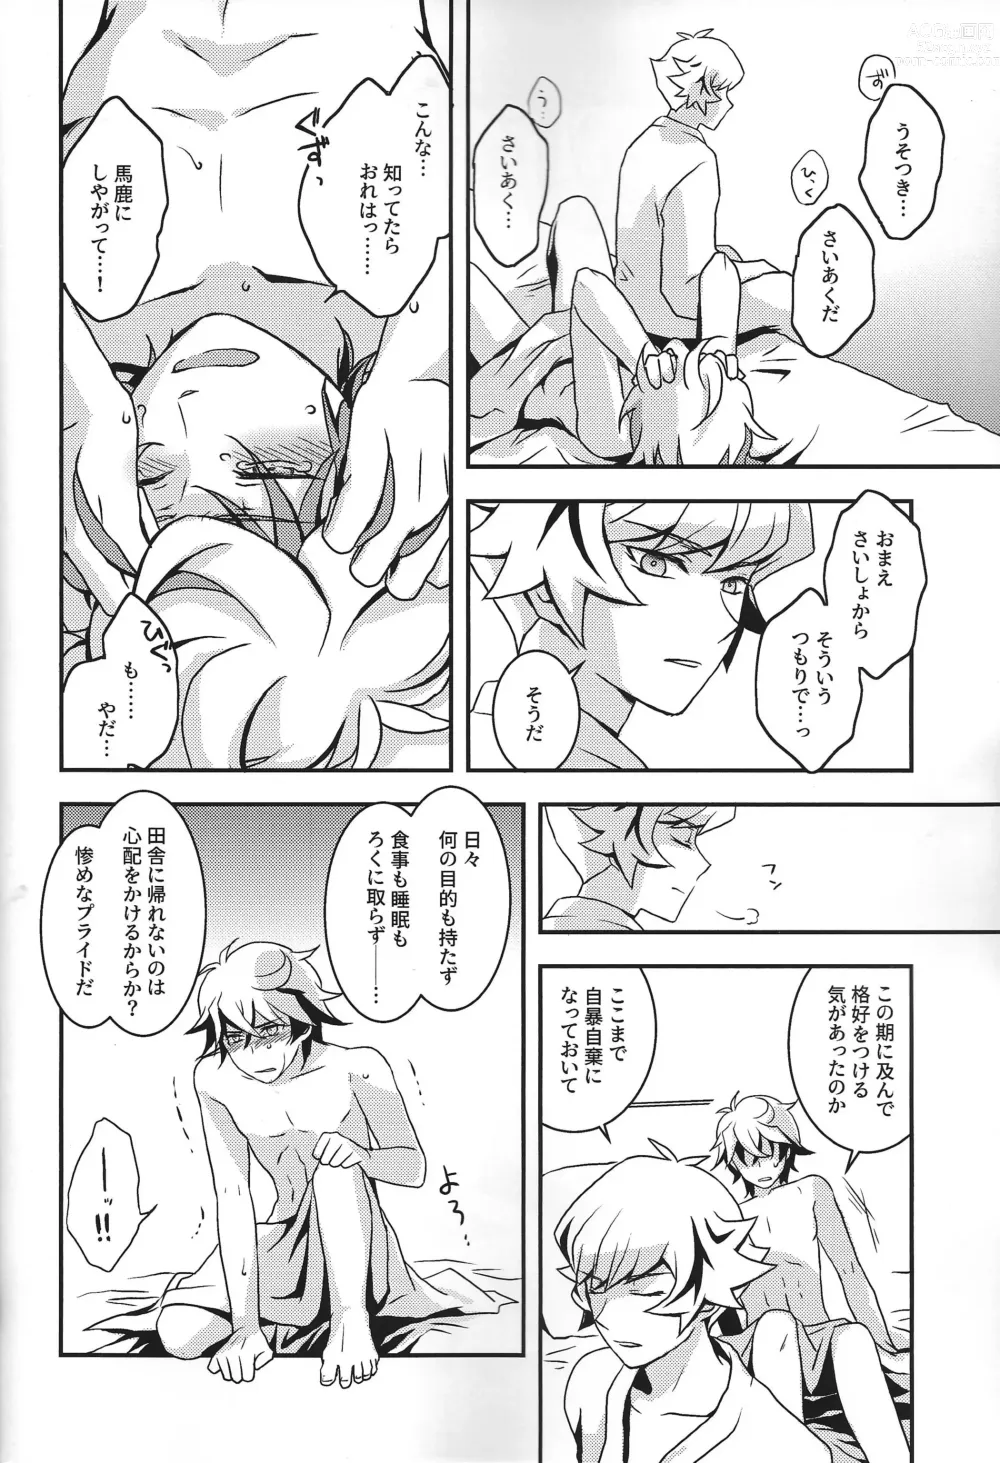 Page 27 of doujinshi Na o Yobu Koe